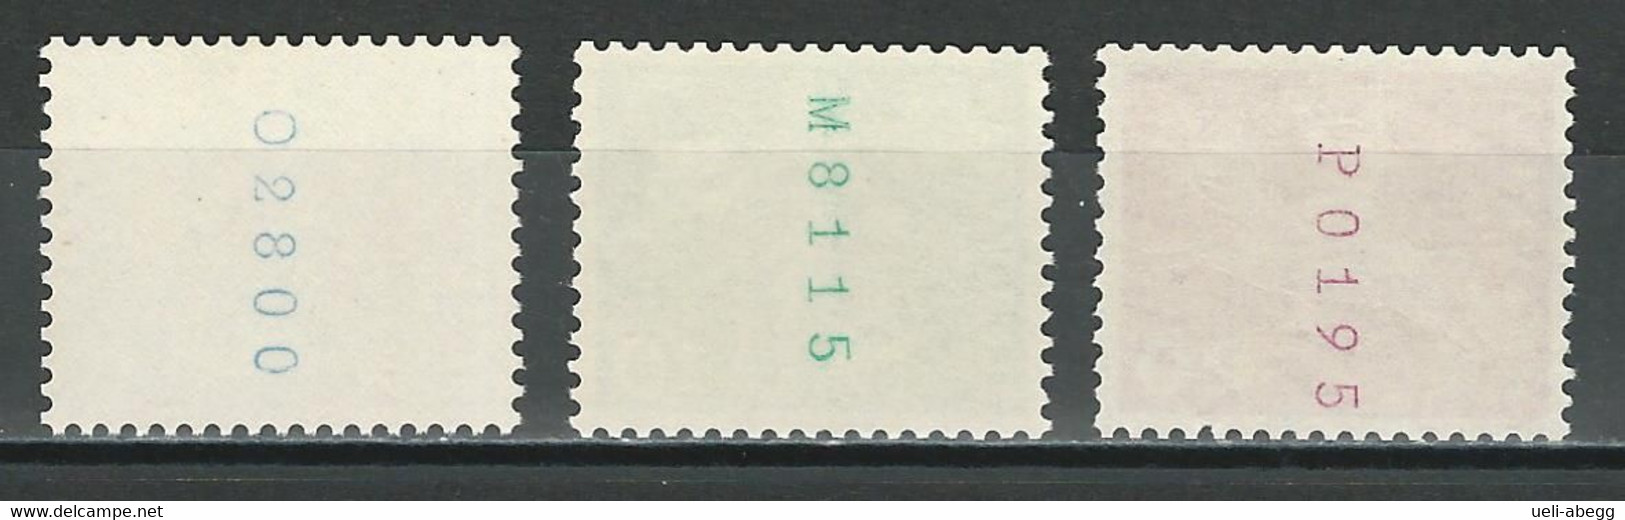 SBK 355, 356, 358 RM, Mi 696, 697, 699 XR ** - Coil Stamps